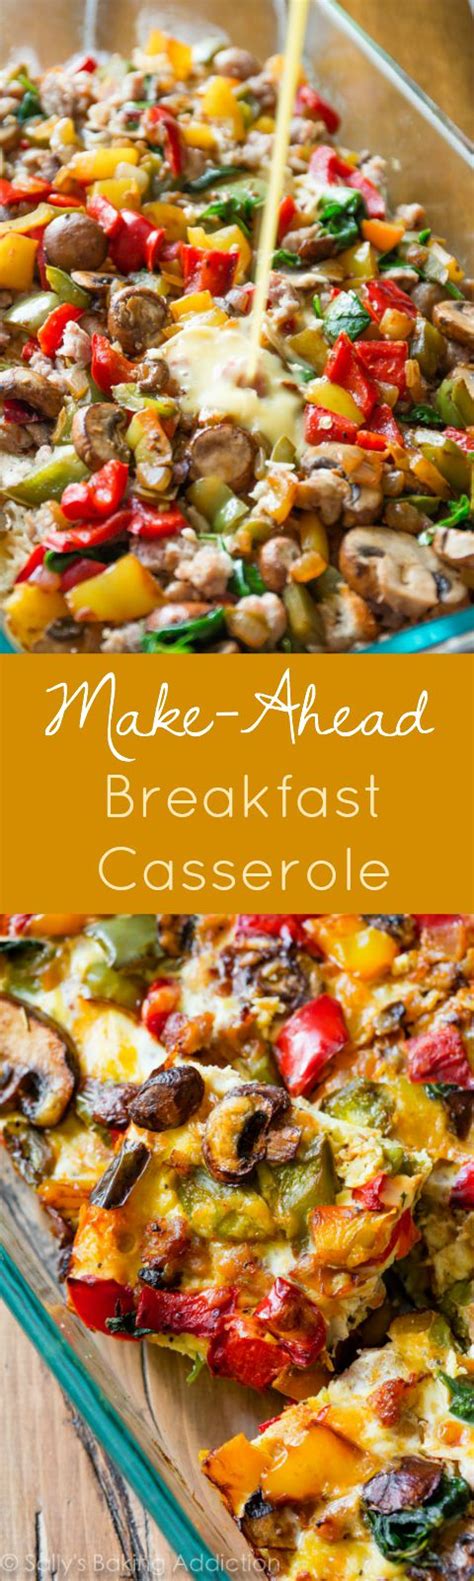 Easy Make Ahead Breakfast Casserole Sallys Baking Addiction